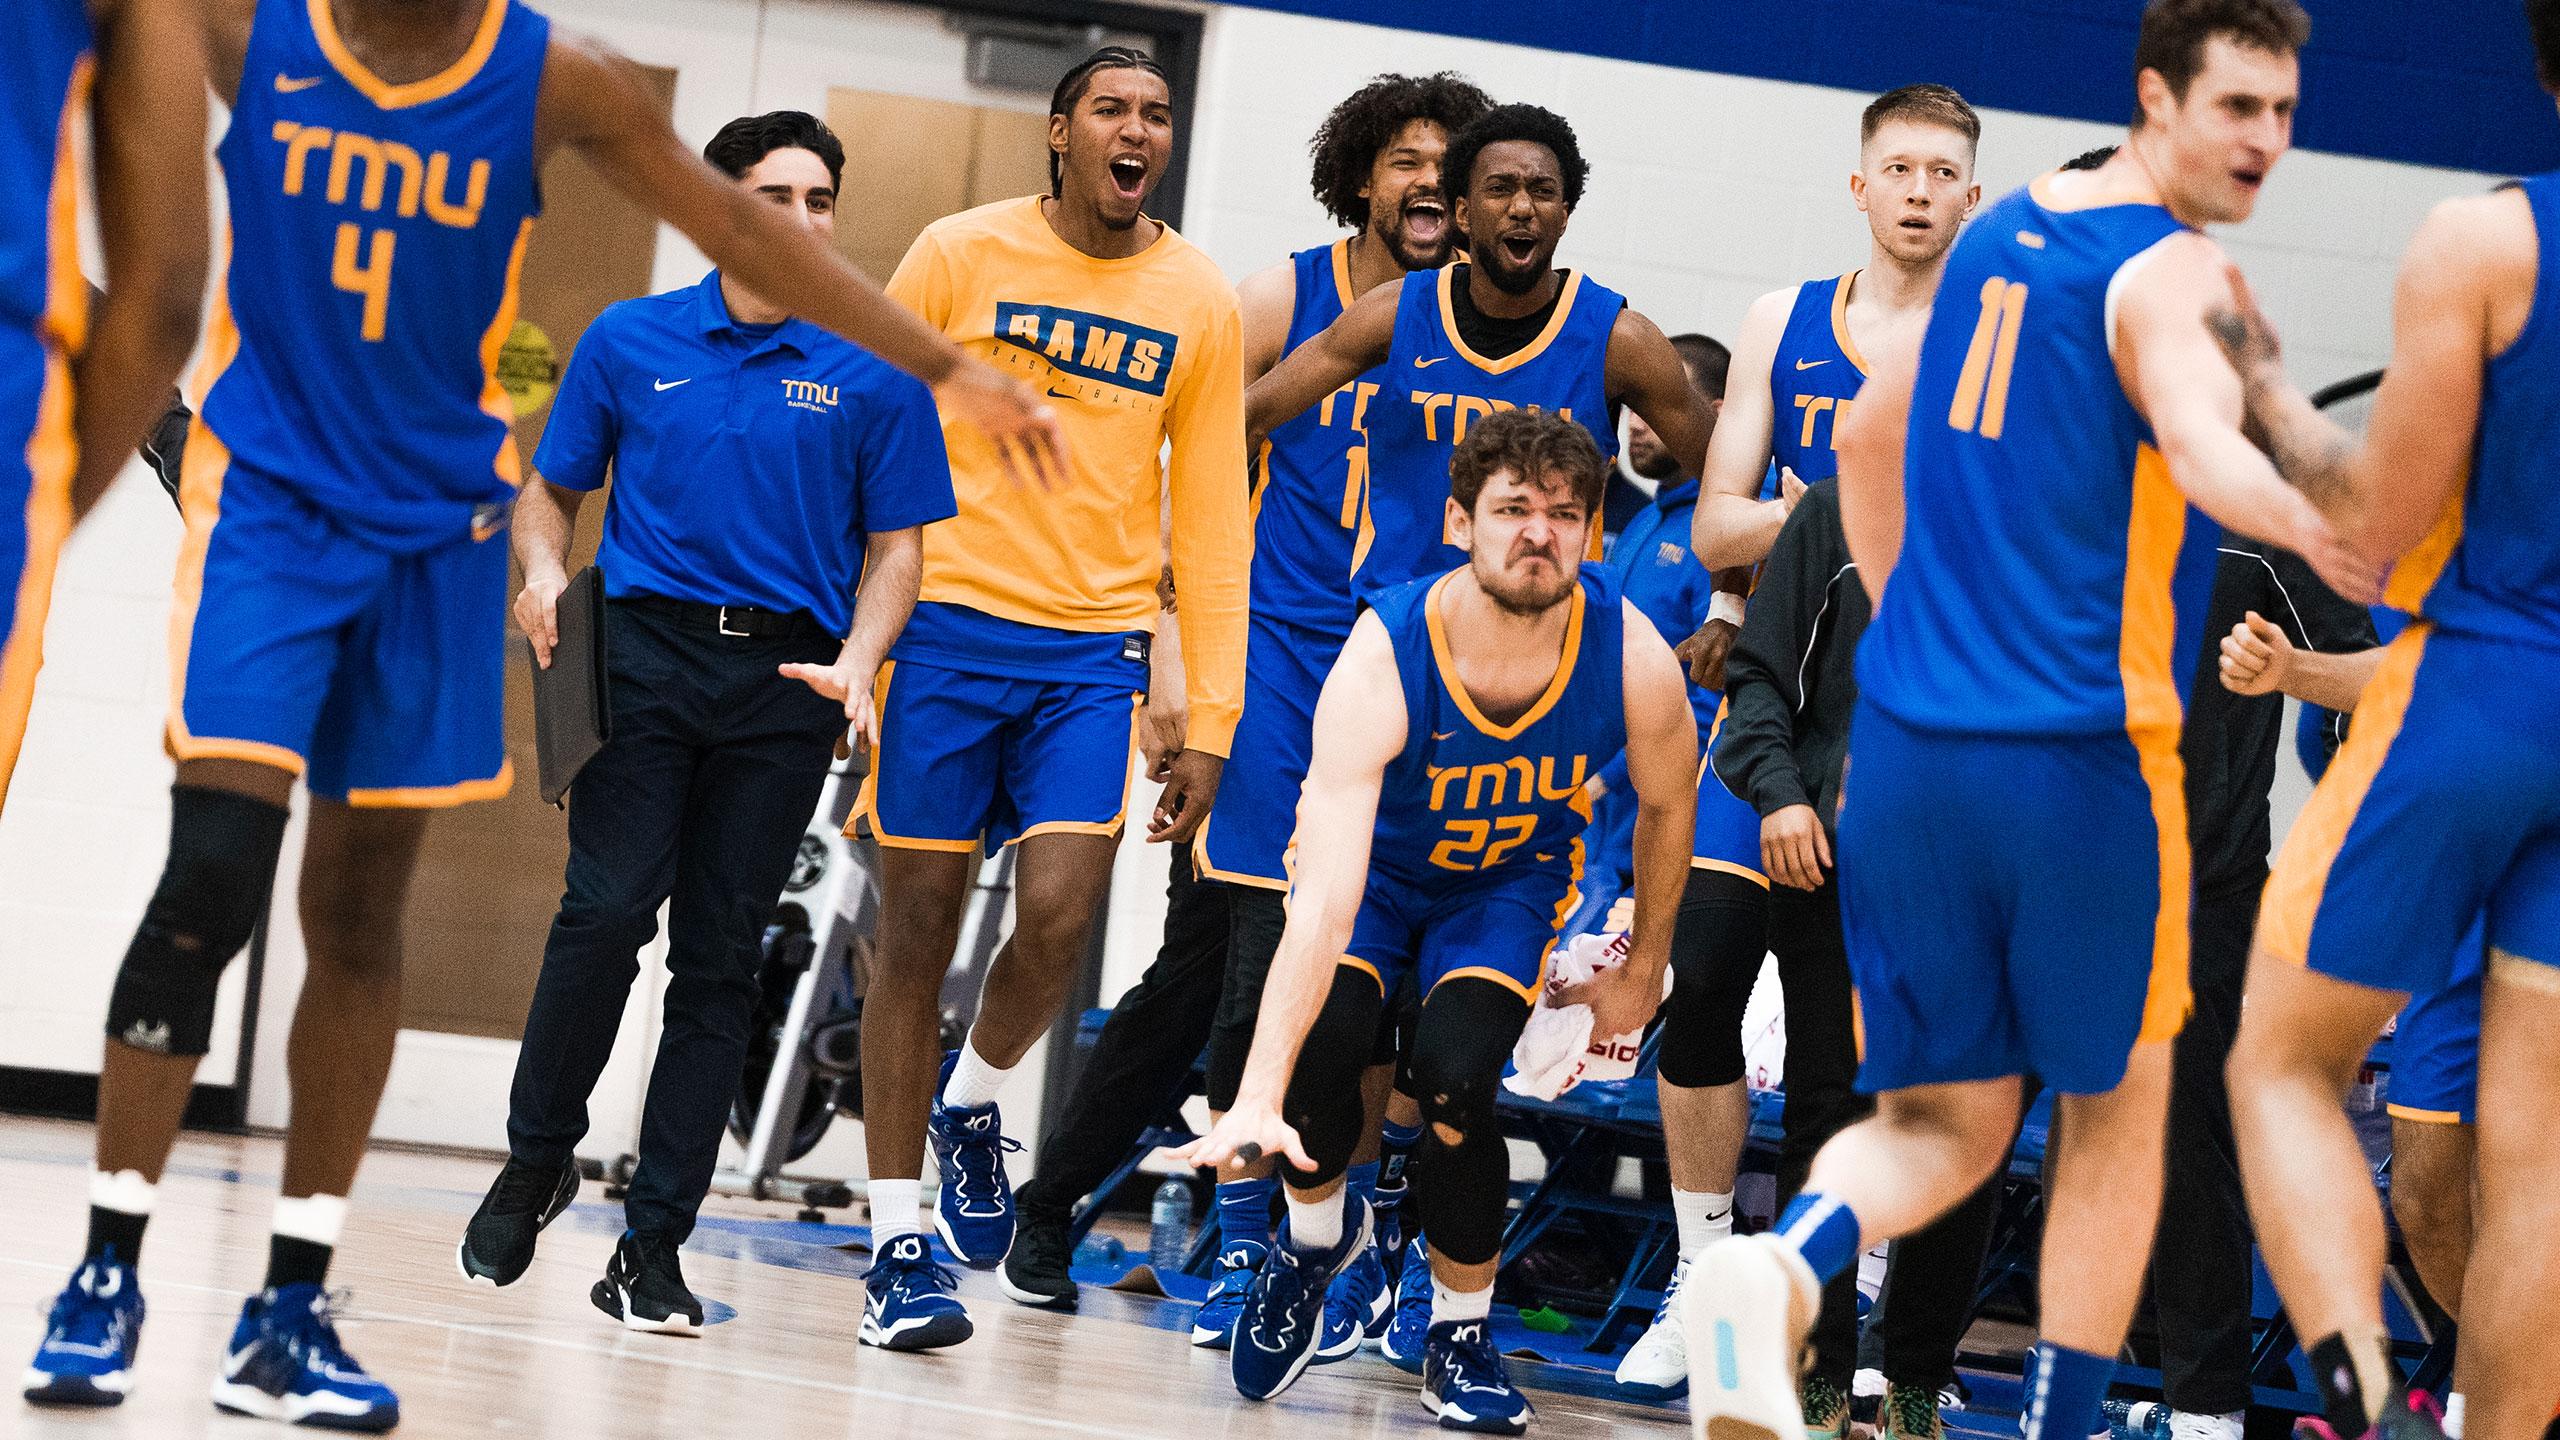 The TMU men's basketball team in blue jerseys celebrate after a big bucket